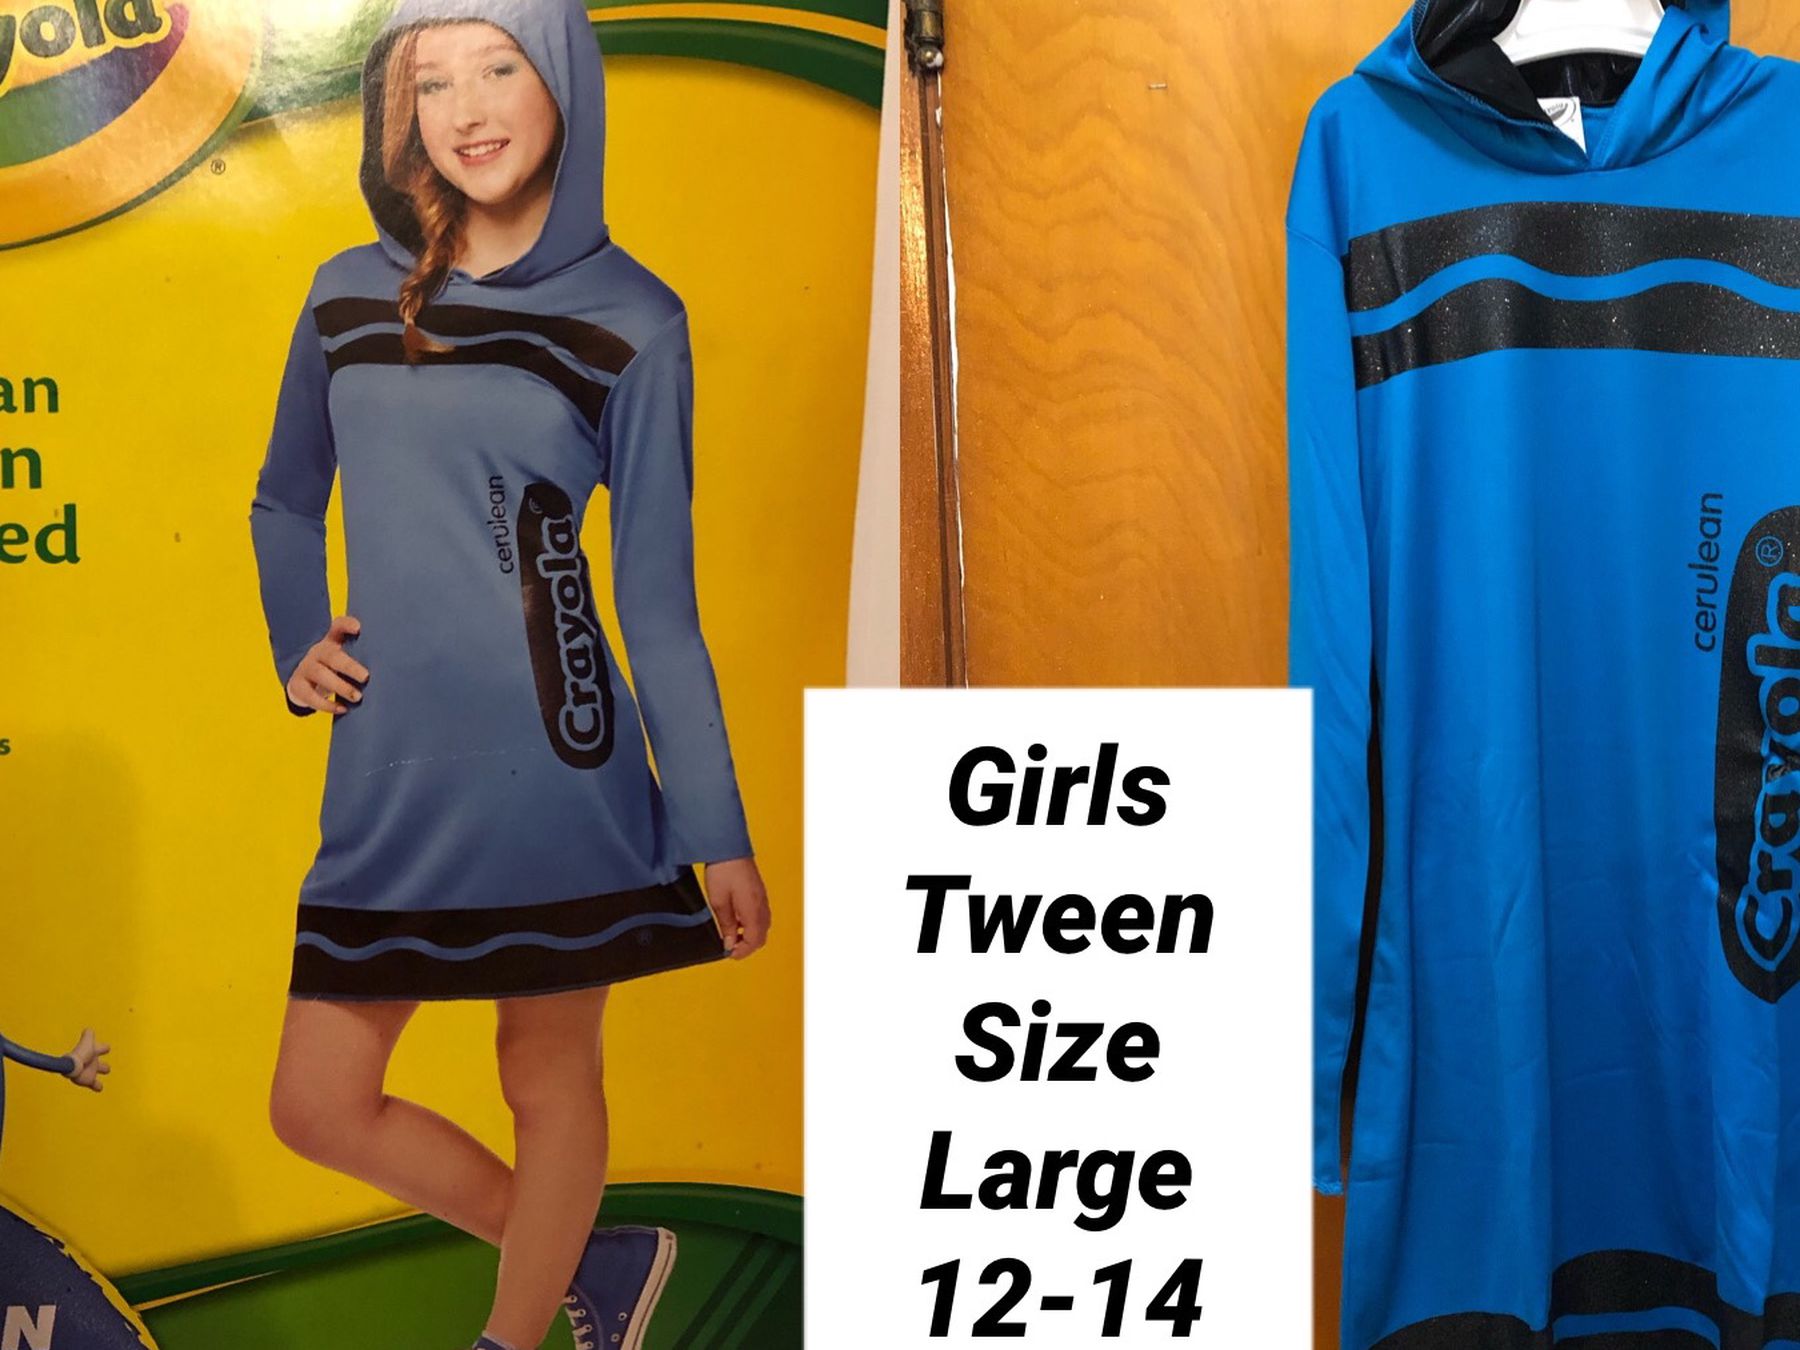 New Girls Crayola New Girls Tween Crayola Blue Halloween dress up costume dress size Large 12-14